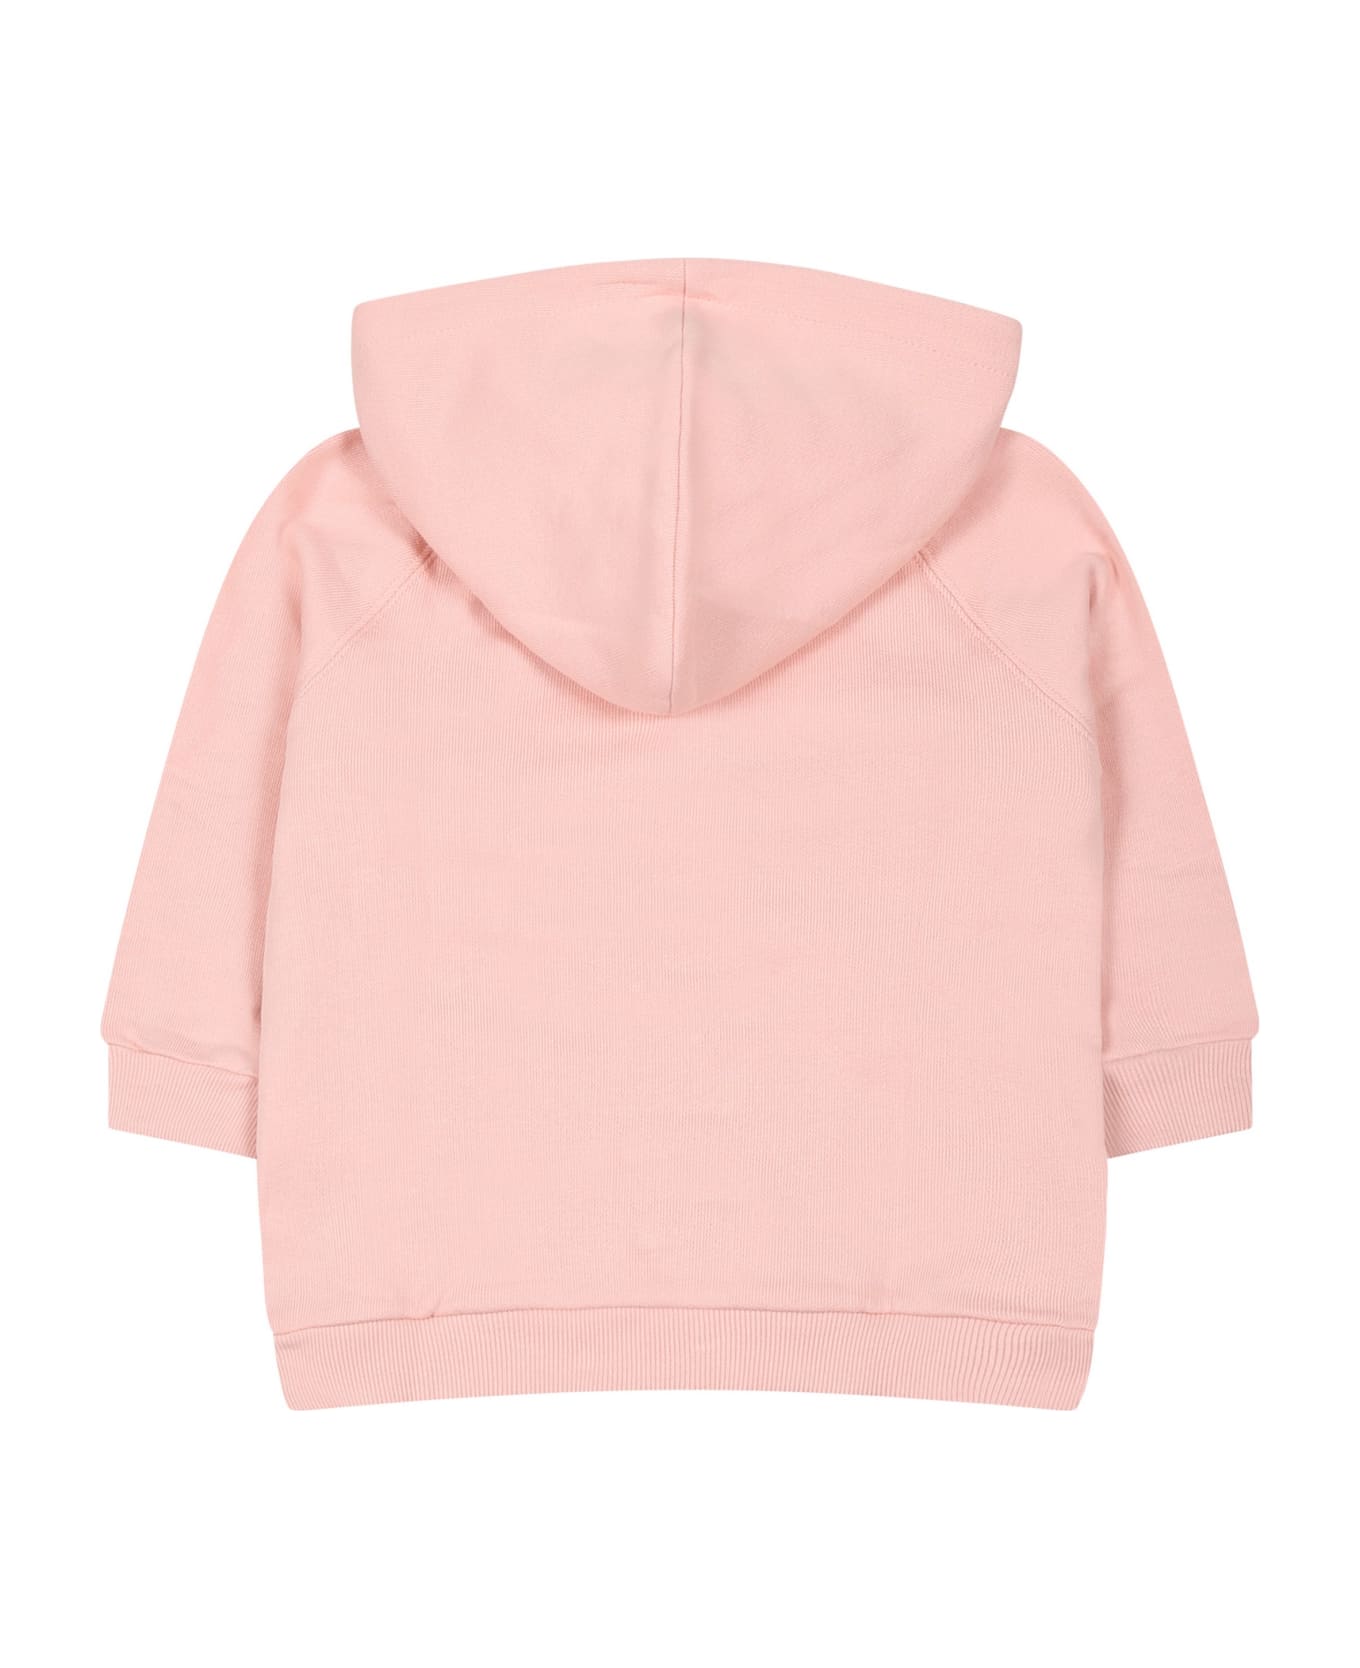 Gucci Pink Sweatshirt For Baby Girl With Interlocking Gg - Pink